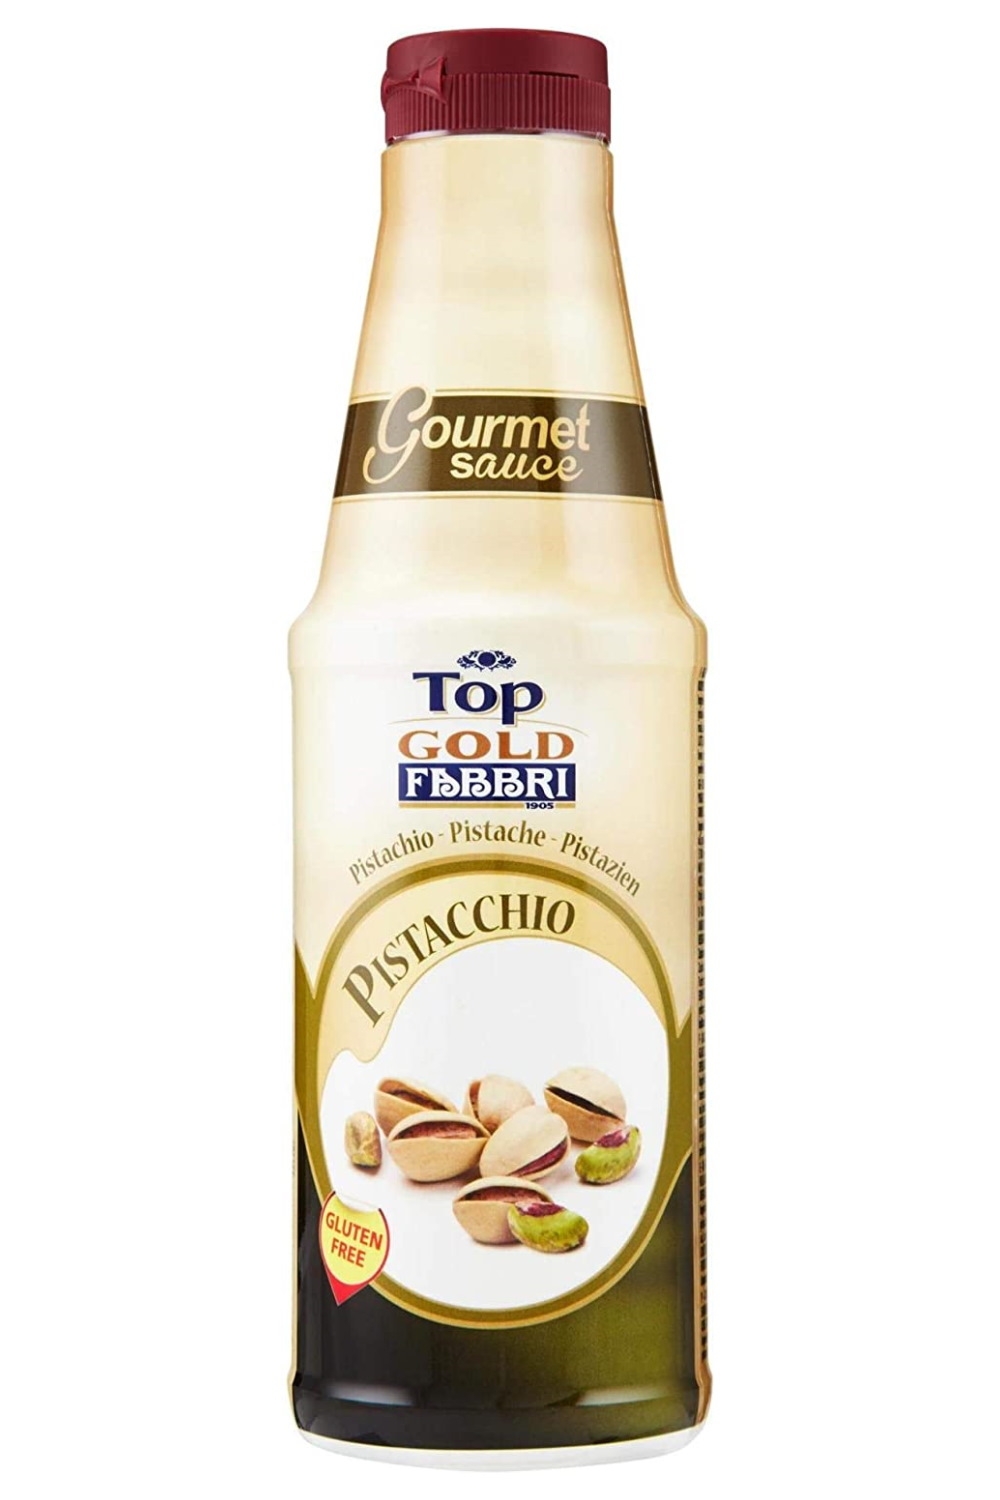 Topping Pistachio Gourmet sauce 850g Fabbri